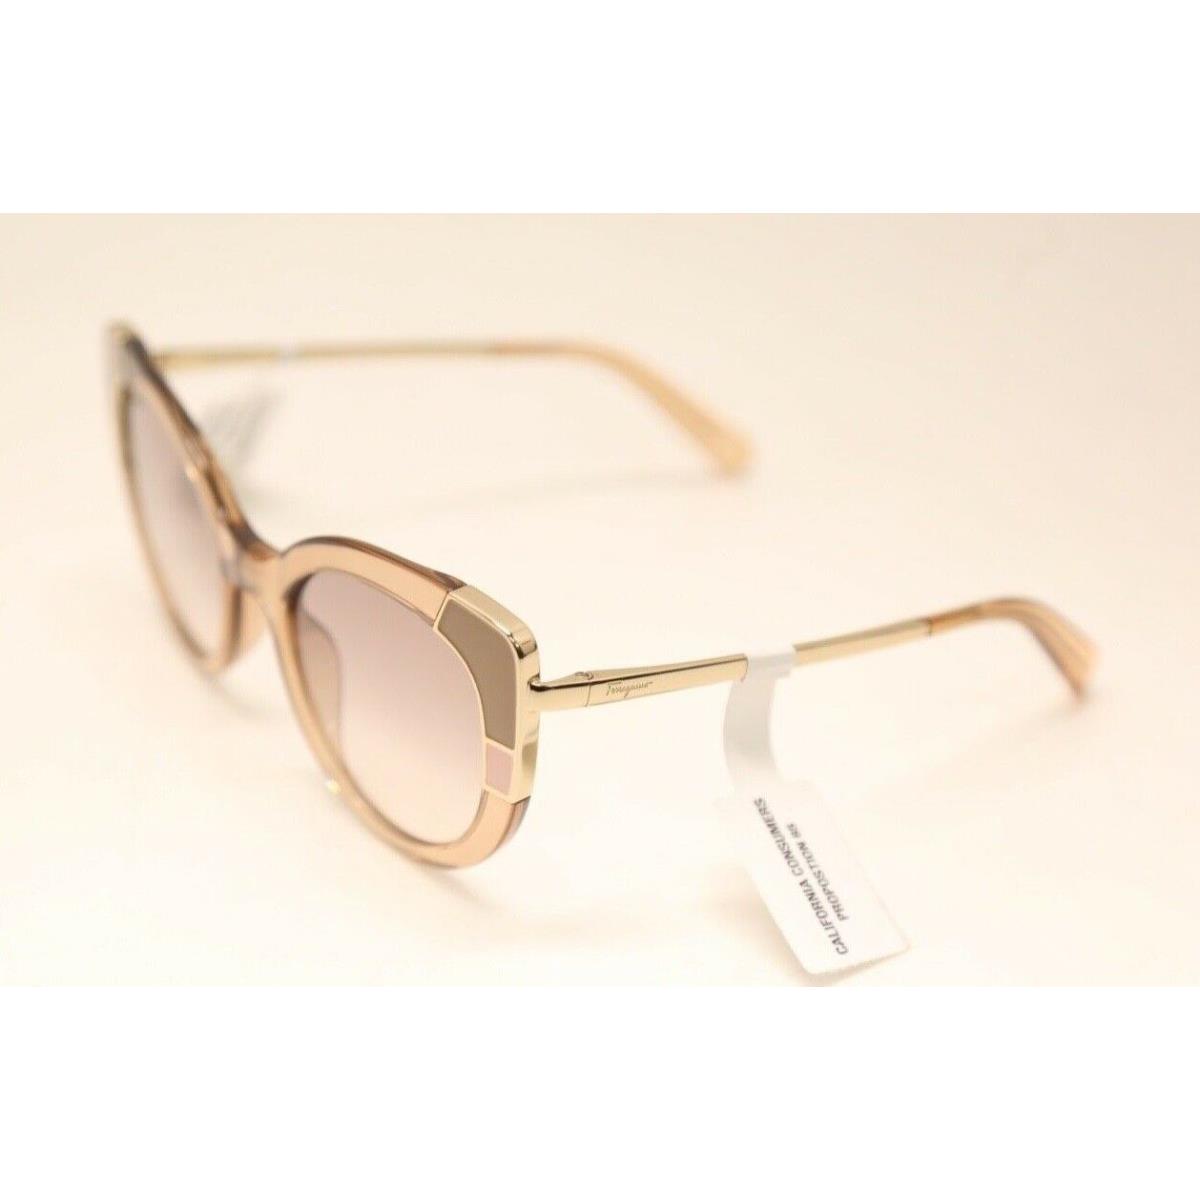 Salvatore Ferragamo sunglasses  - Nude Frame, Brown Lens 1